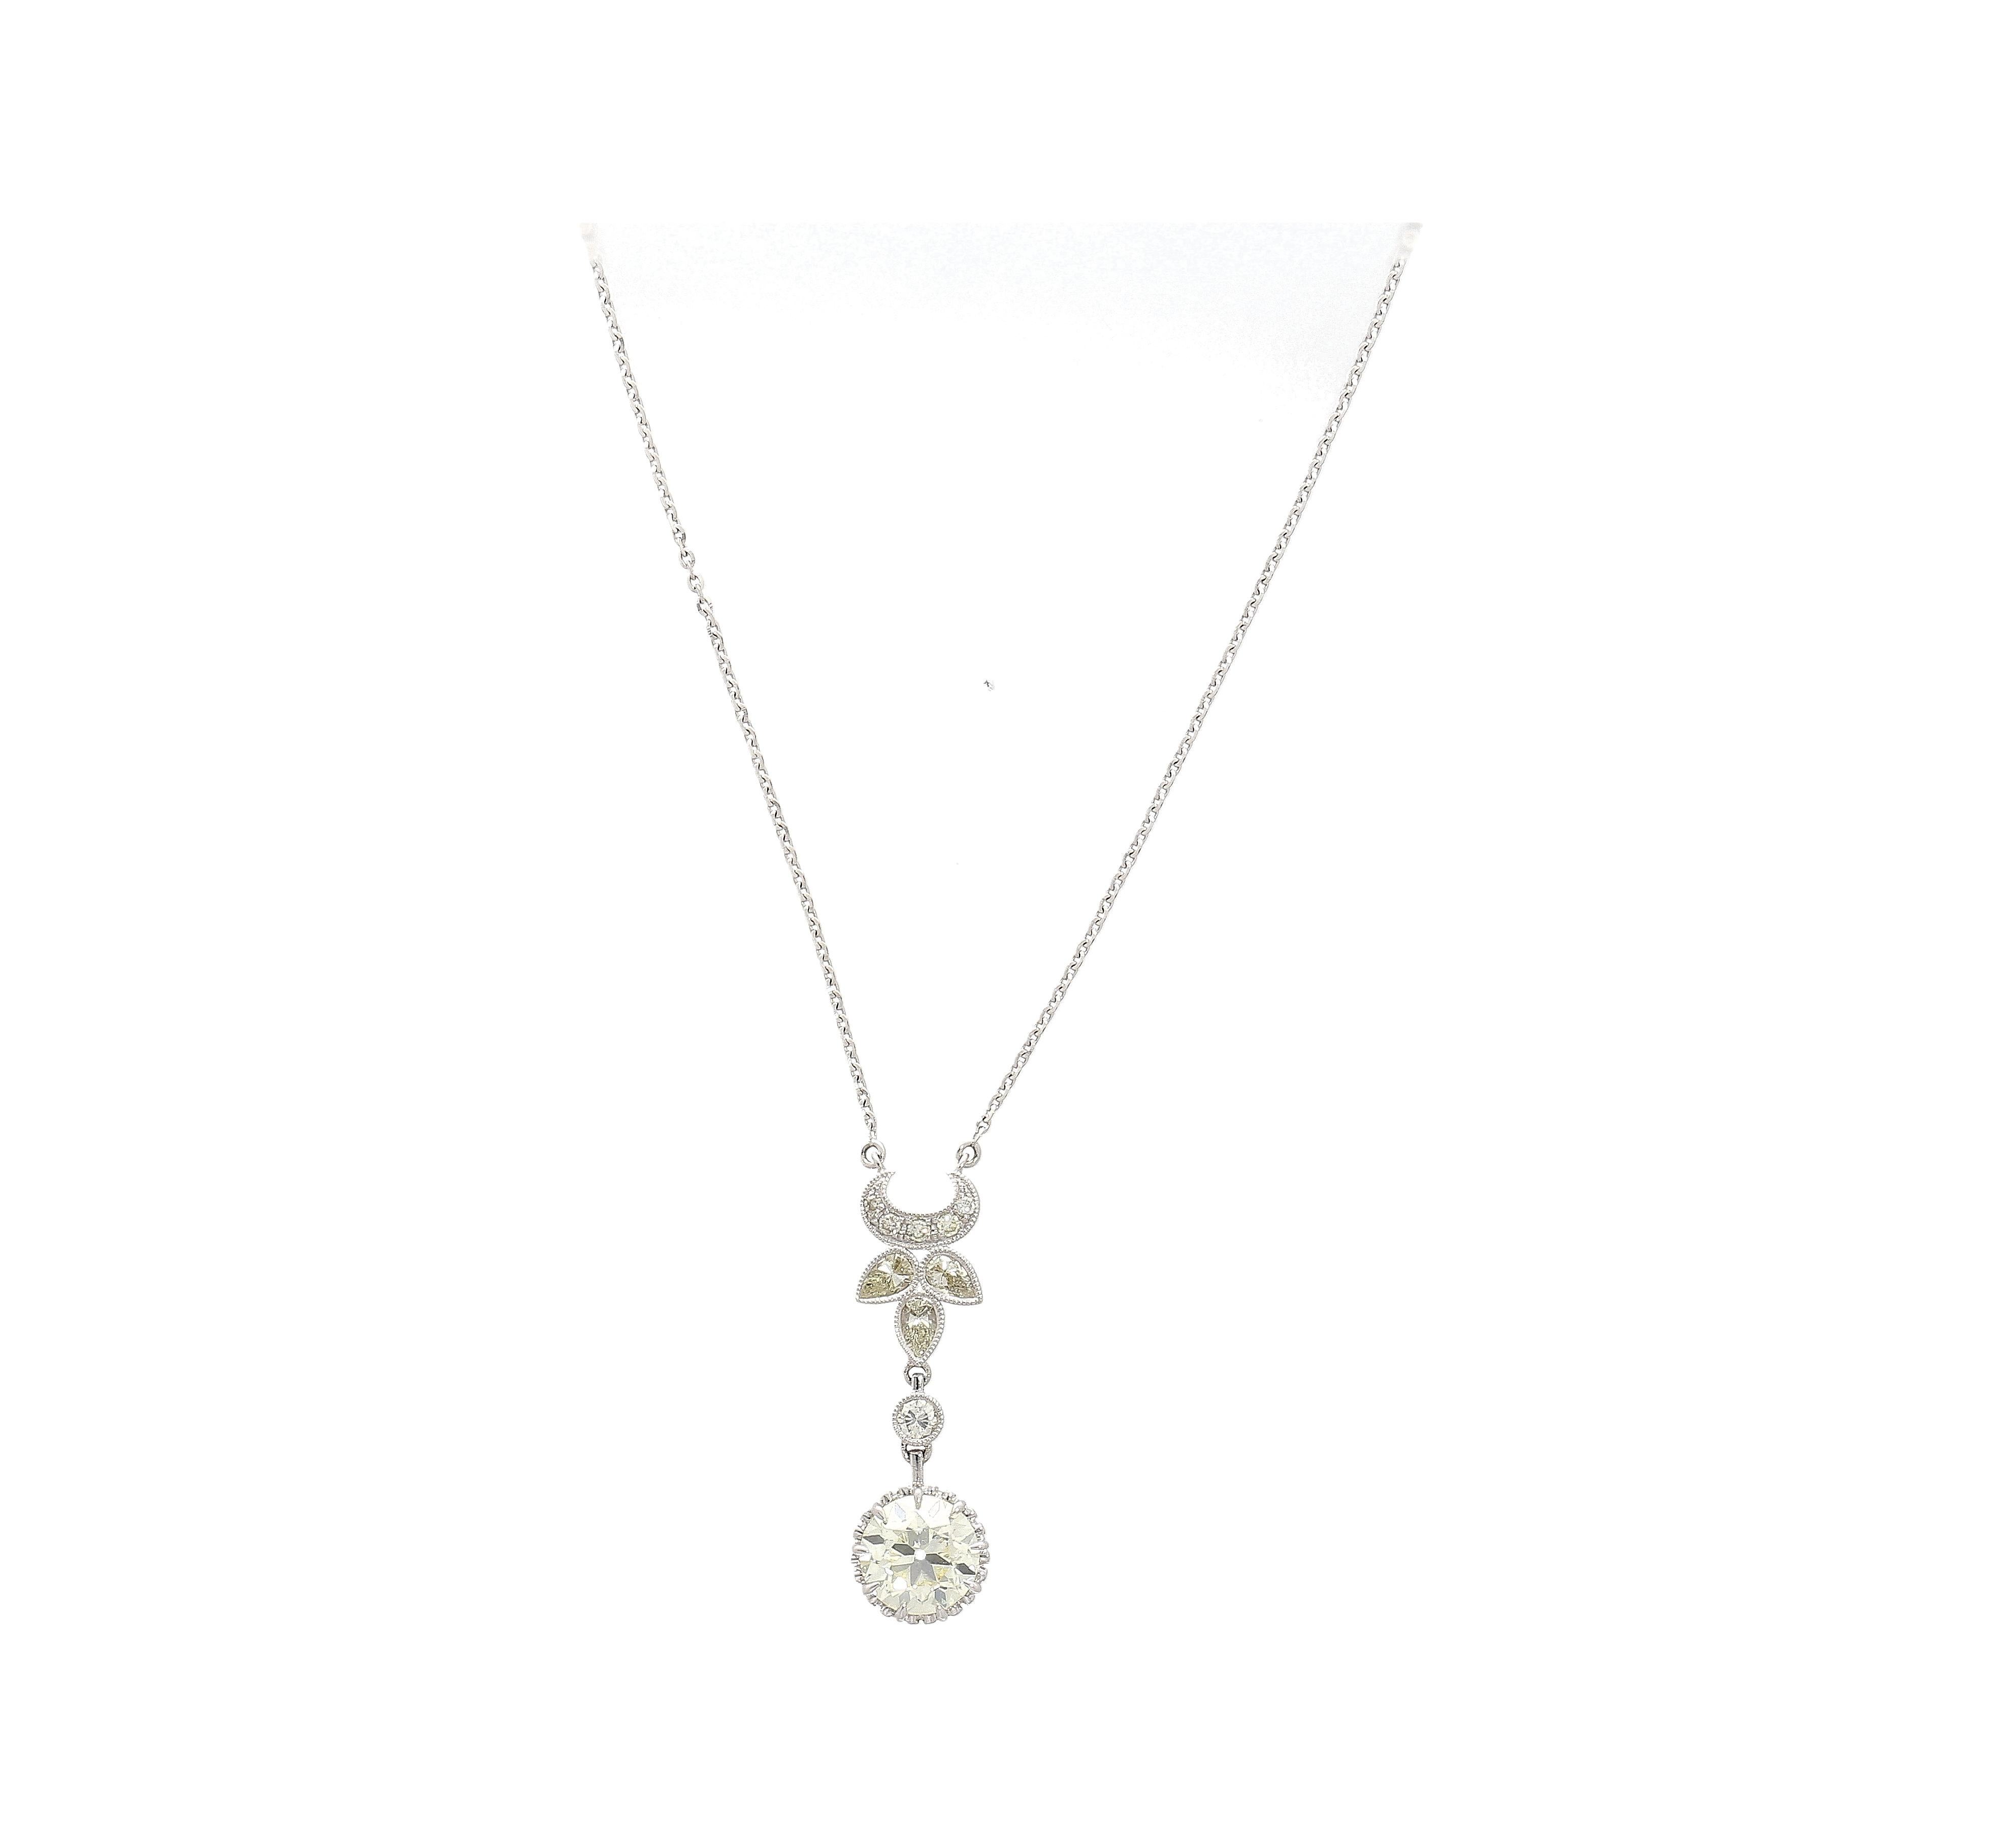 2.60 Carat Old European Cut Diamond Antique Style Pendant Drop Necklace For Sale 1